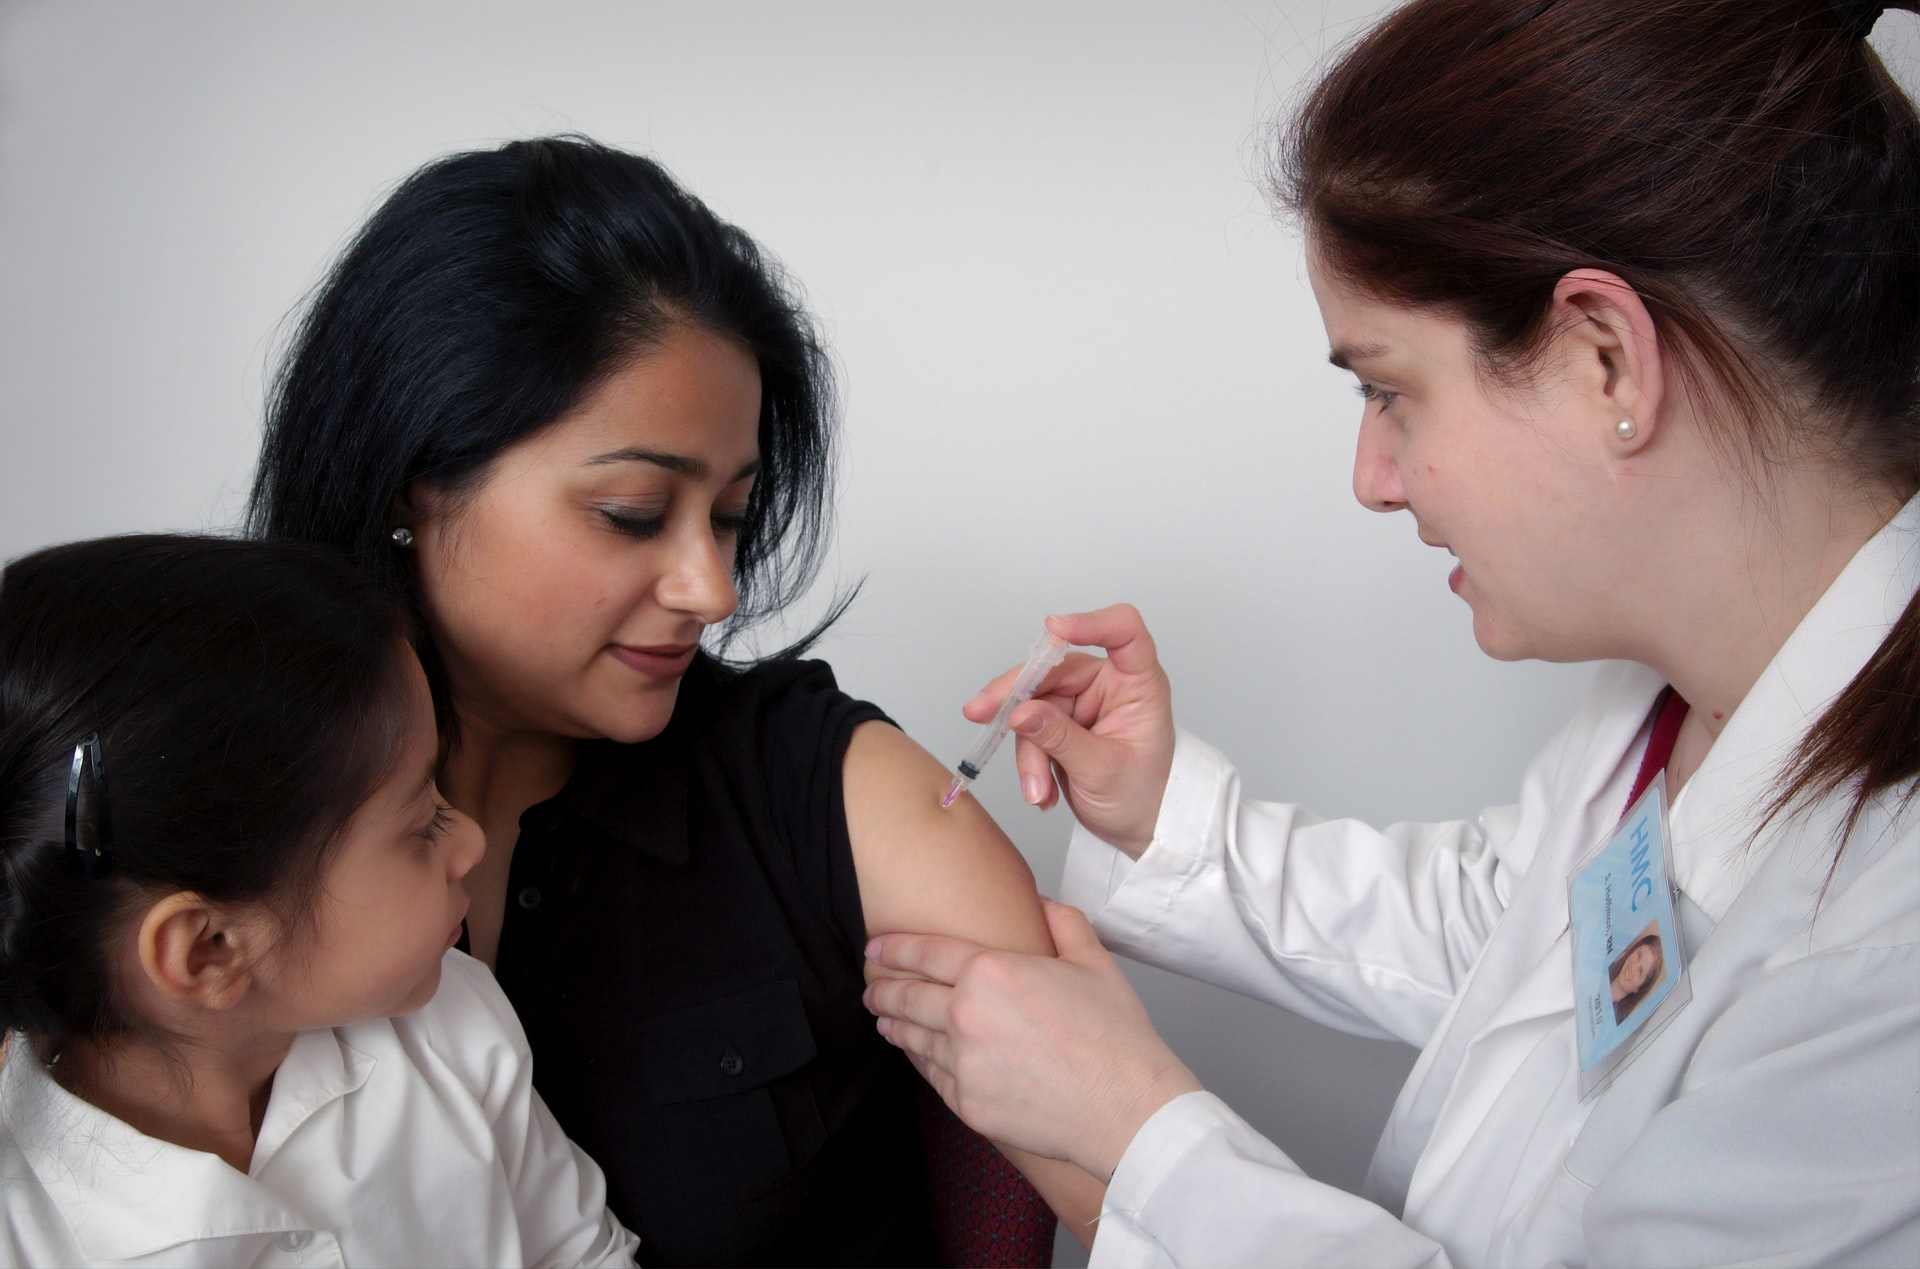 European countries put AstraZeneca vaccine on pause – Expert Reaction